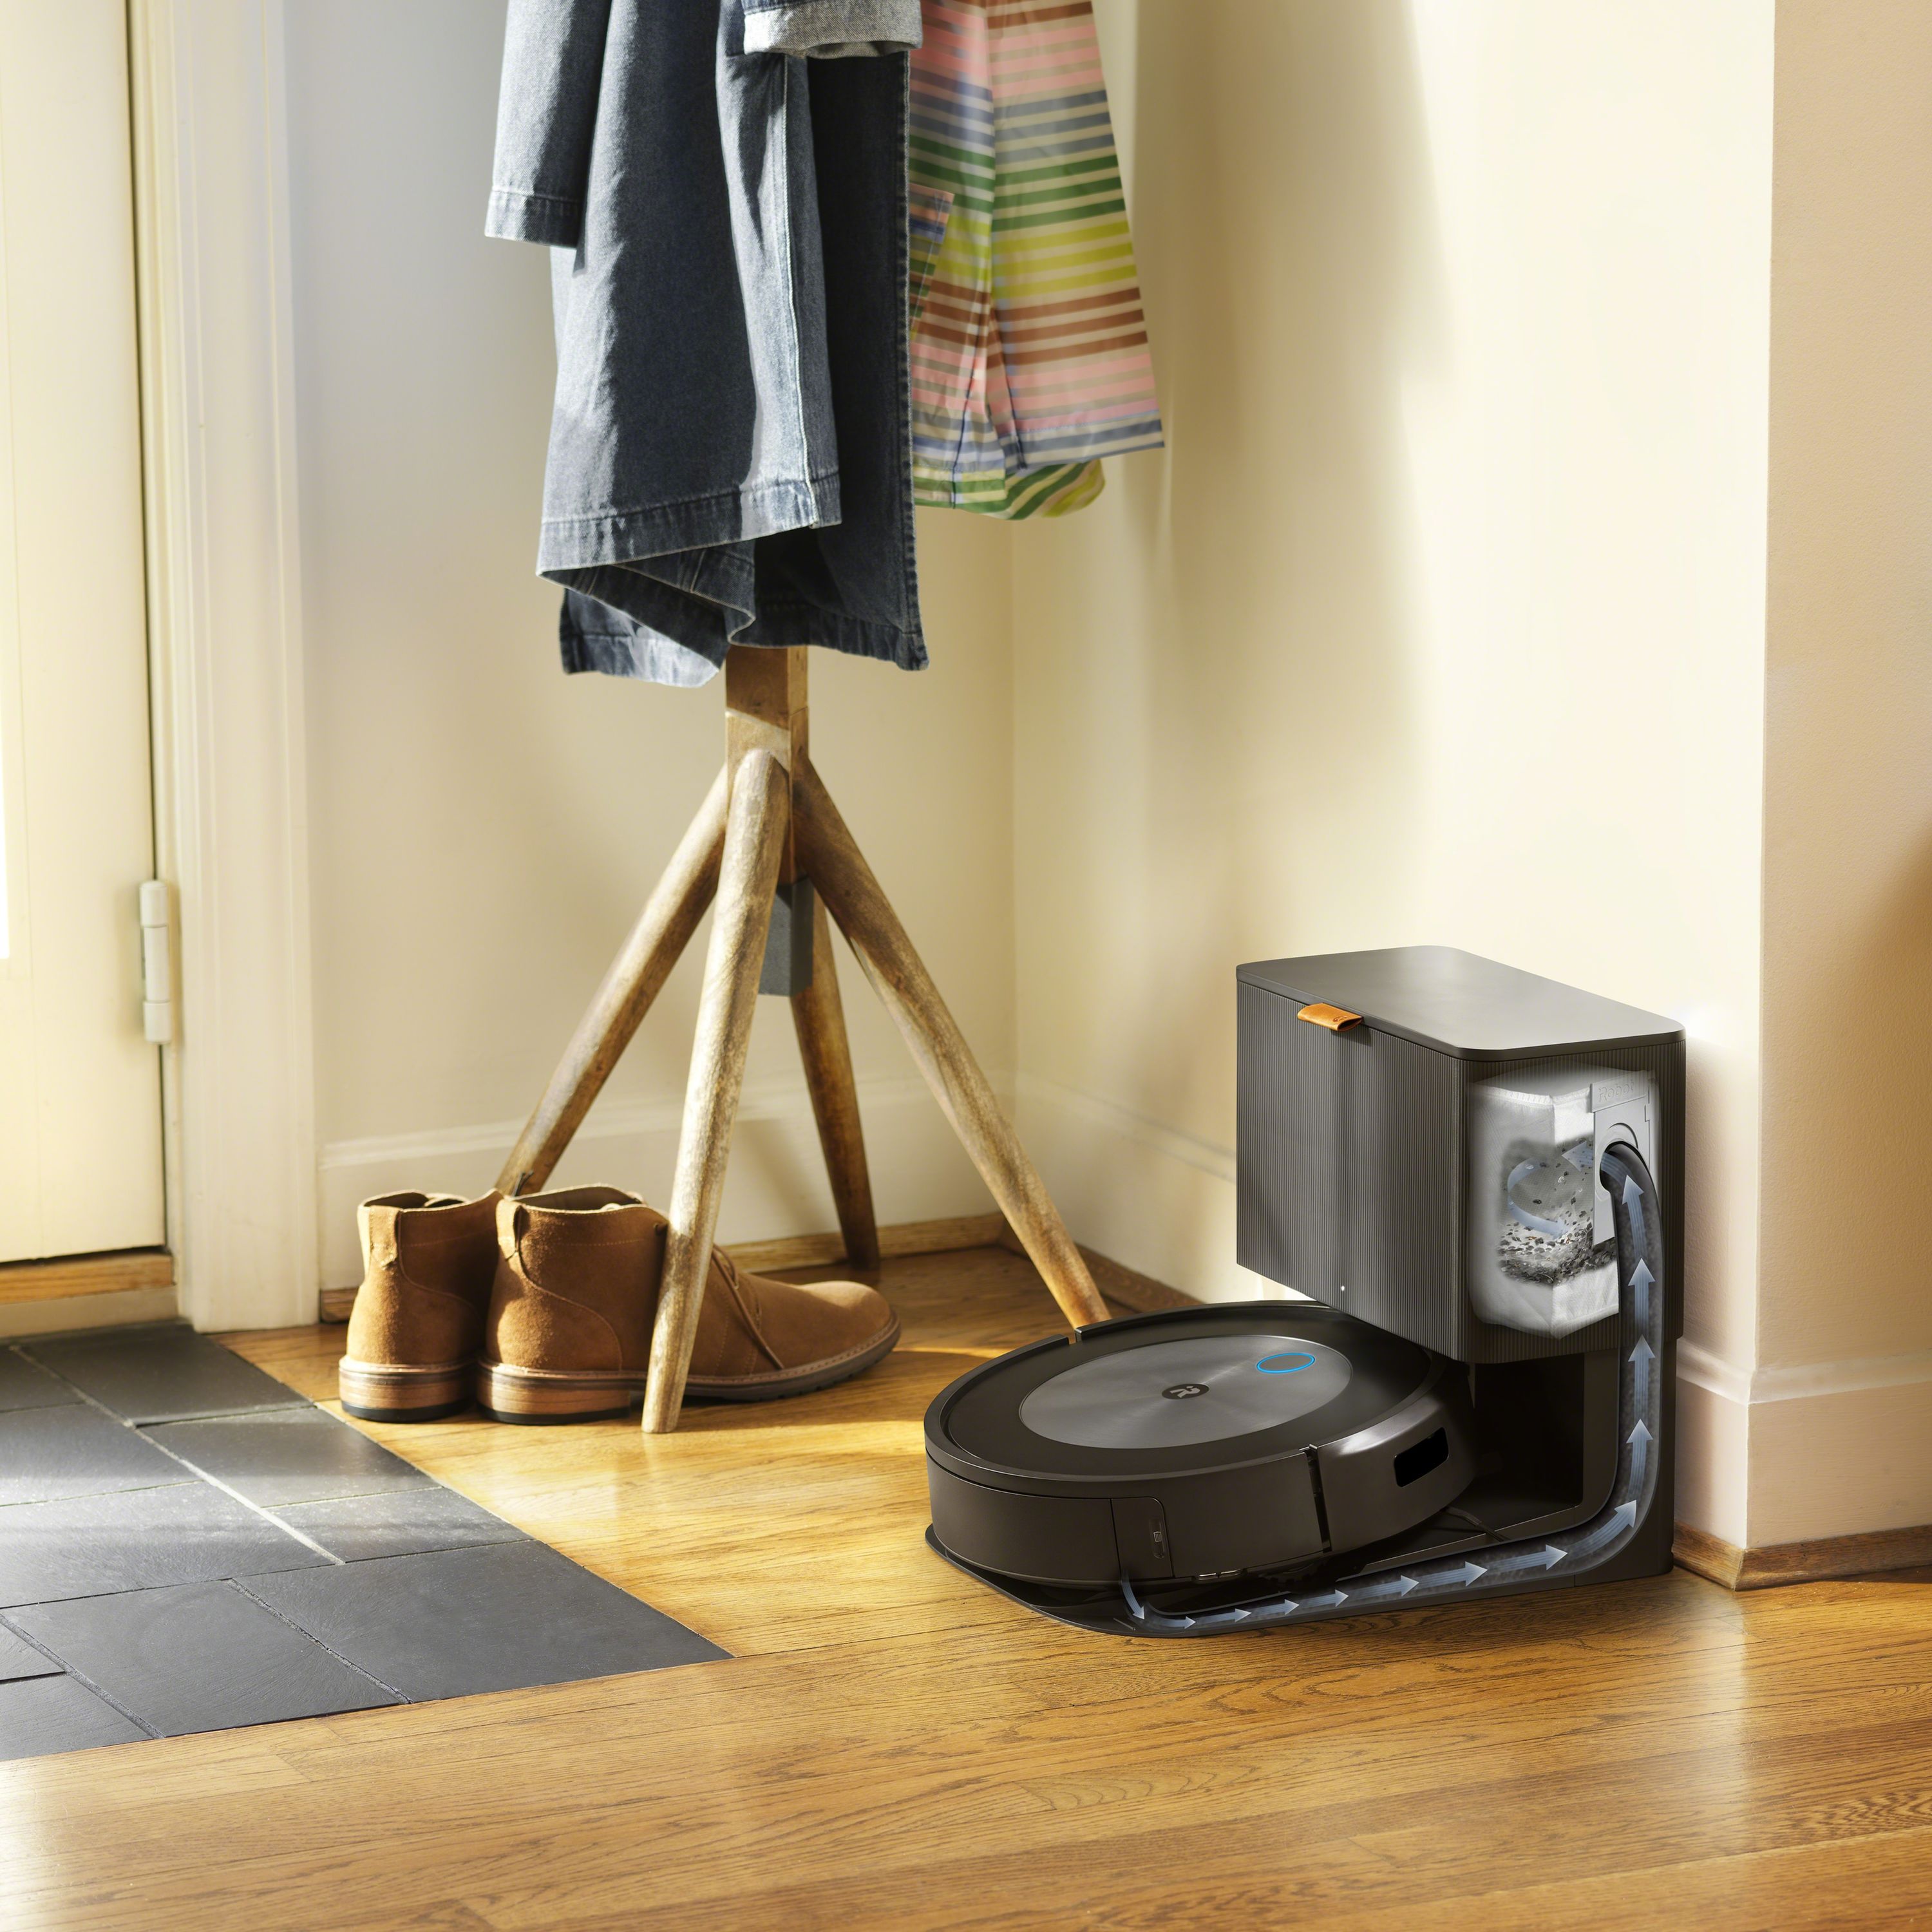 iRobot Roomba j7 Robotic Vacuum Cleaner - Graphite for sale online